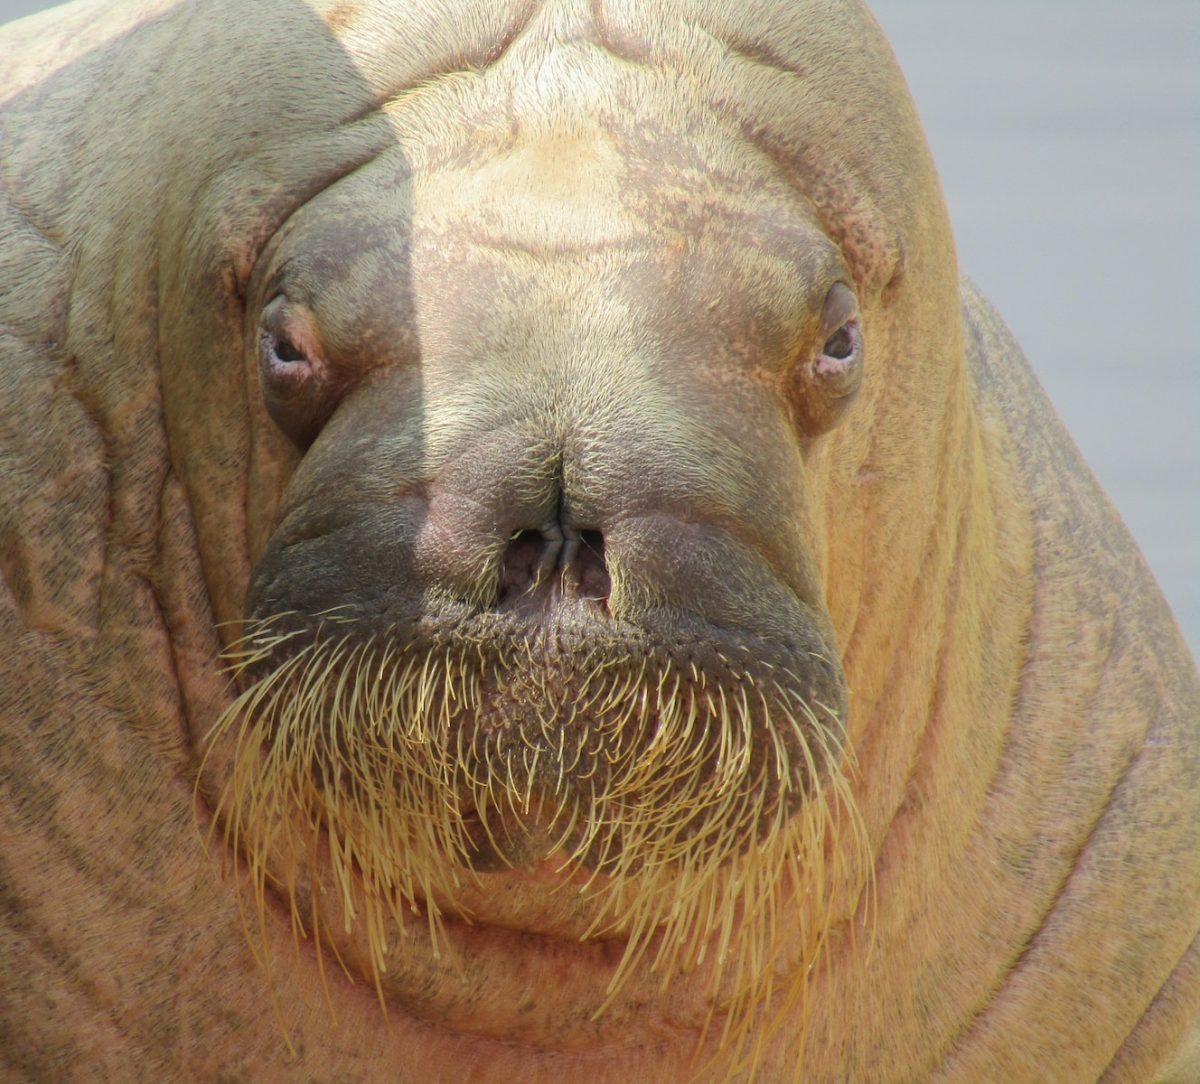 a close up of a sea lion with a beard